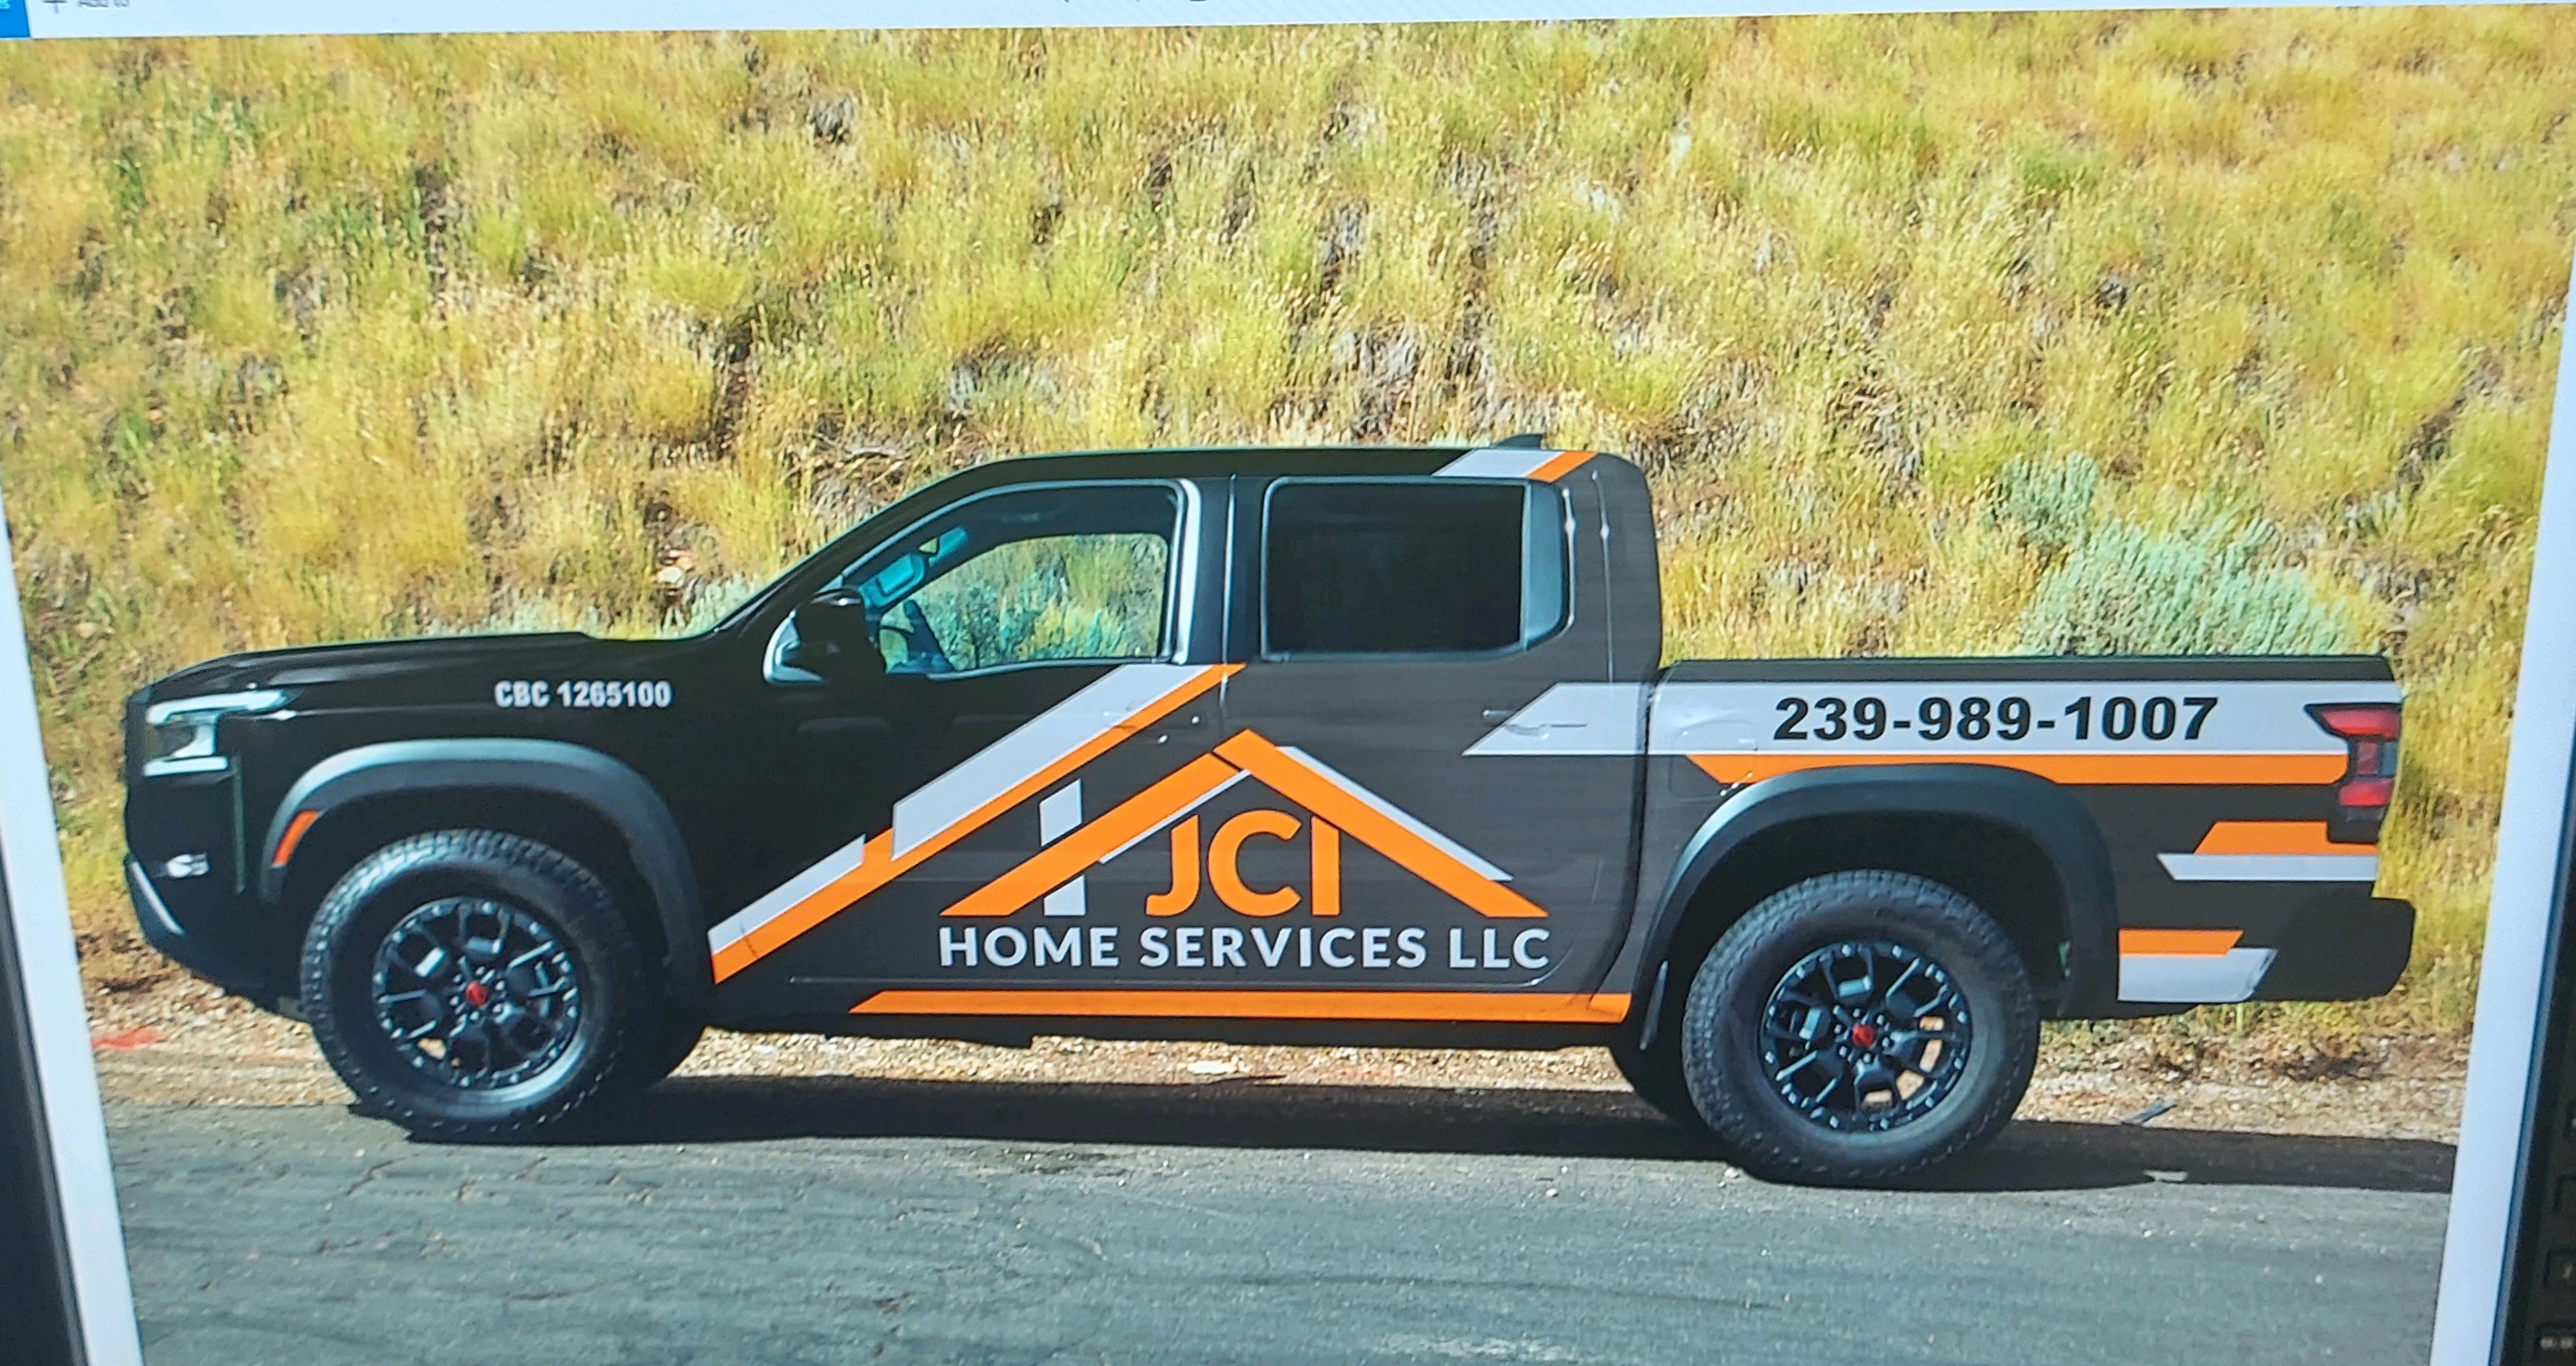 JCI Home Services LLC Logo